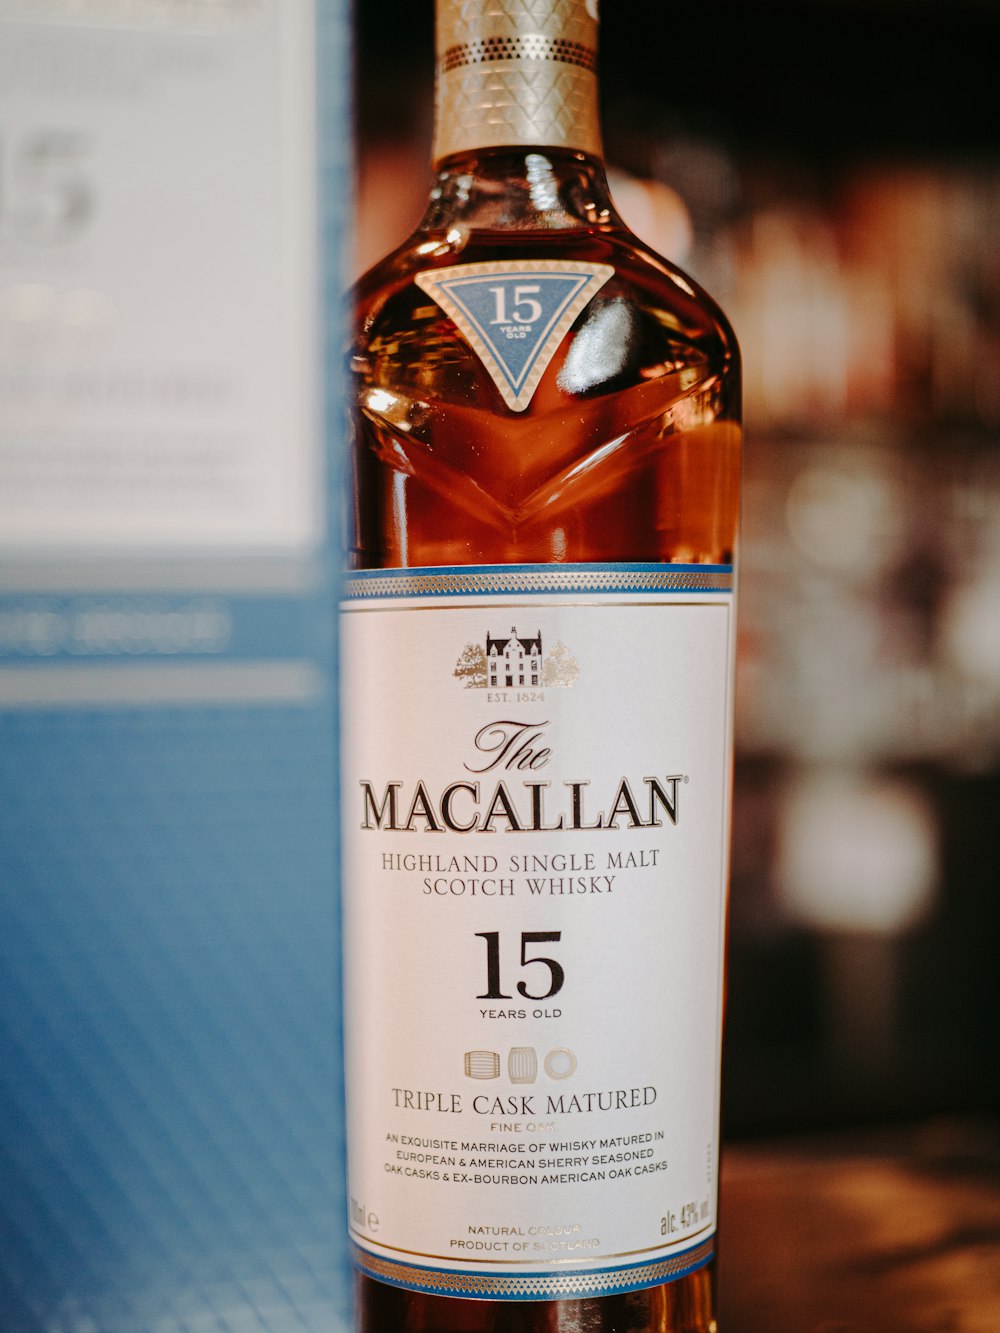 The Macallan highland single malt scotch whisky bottle